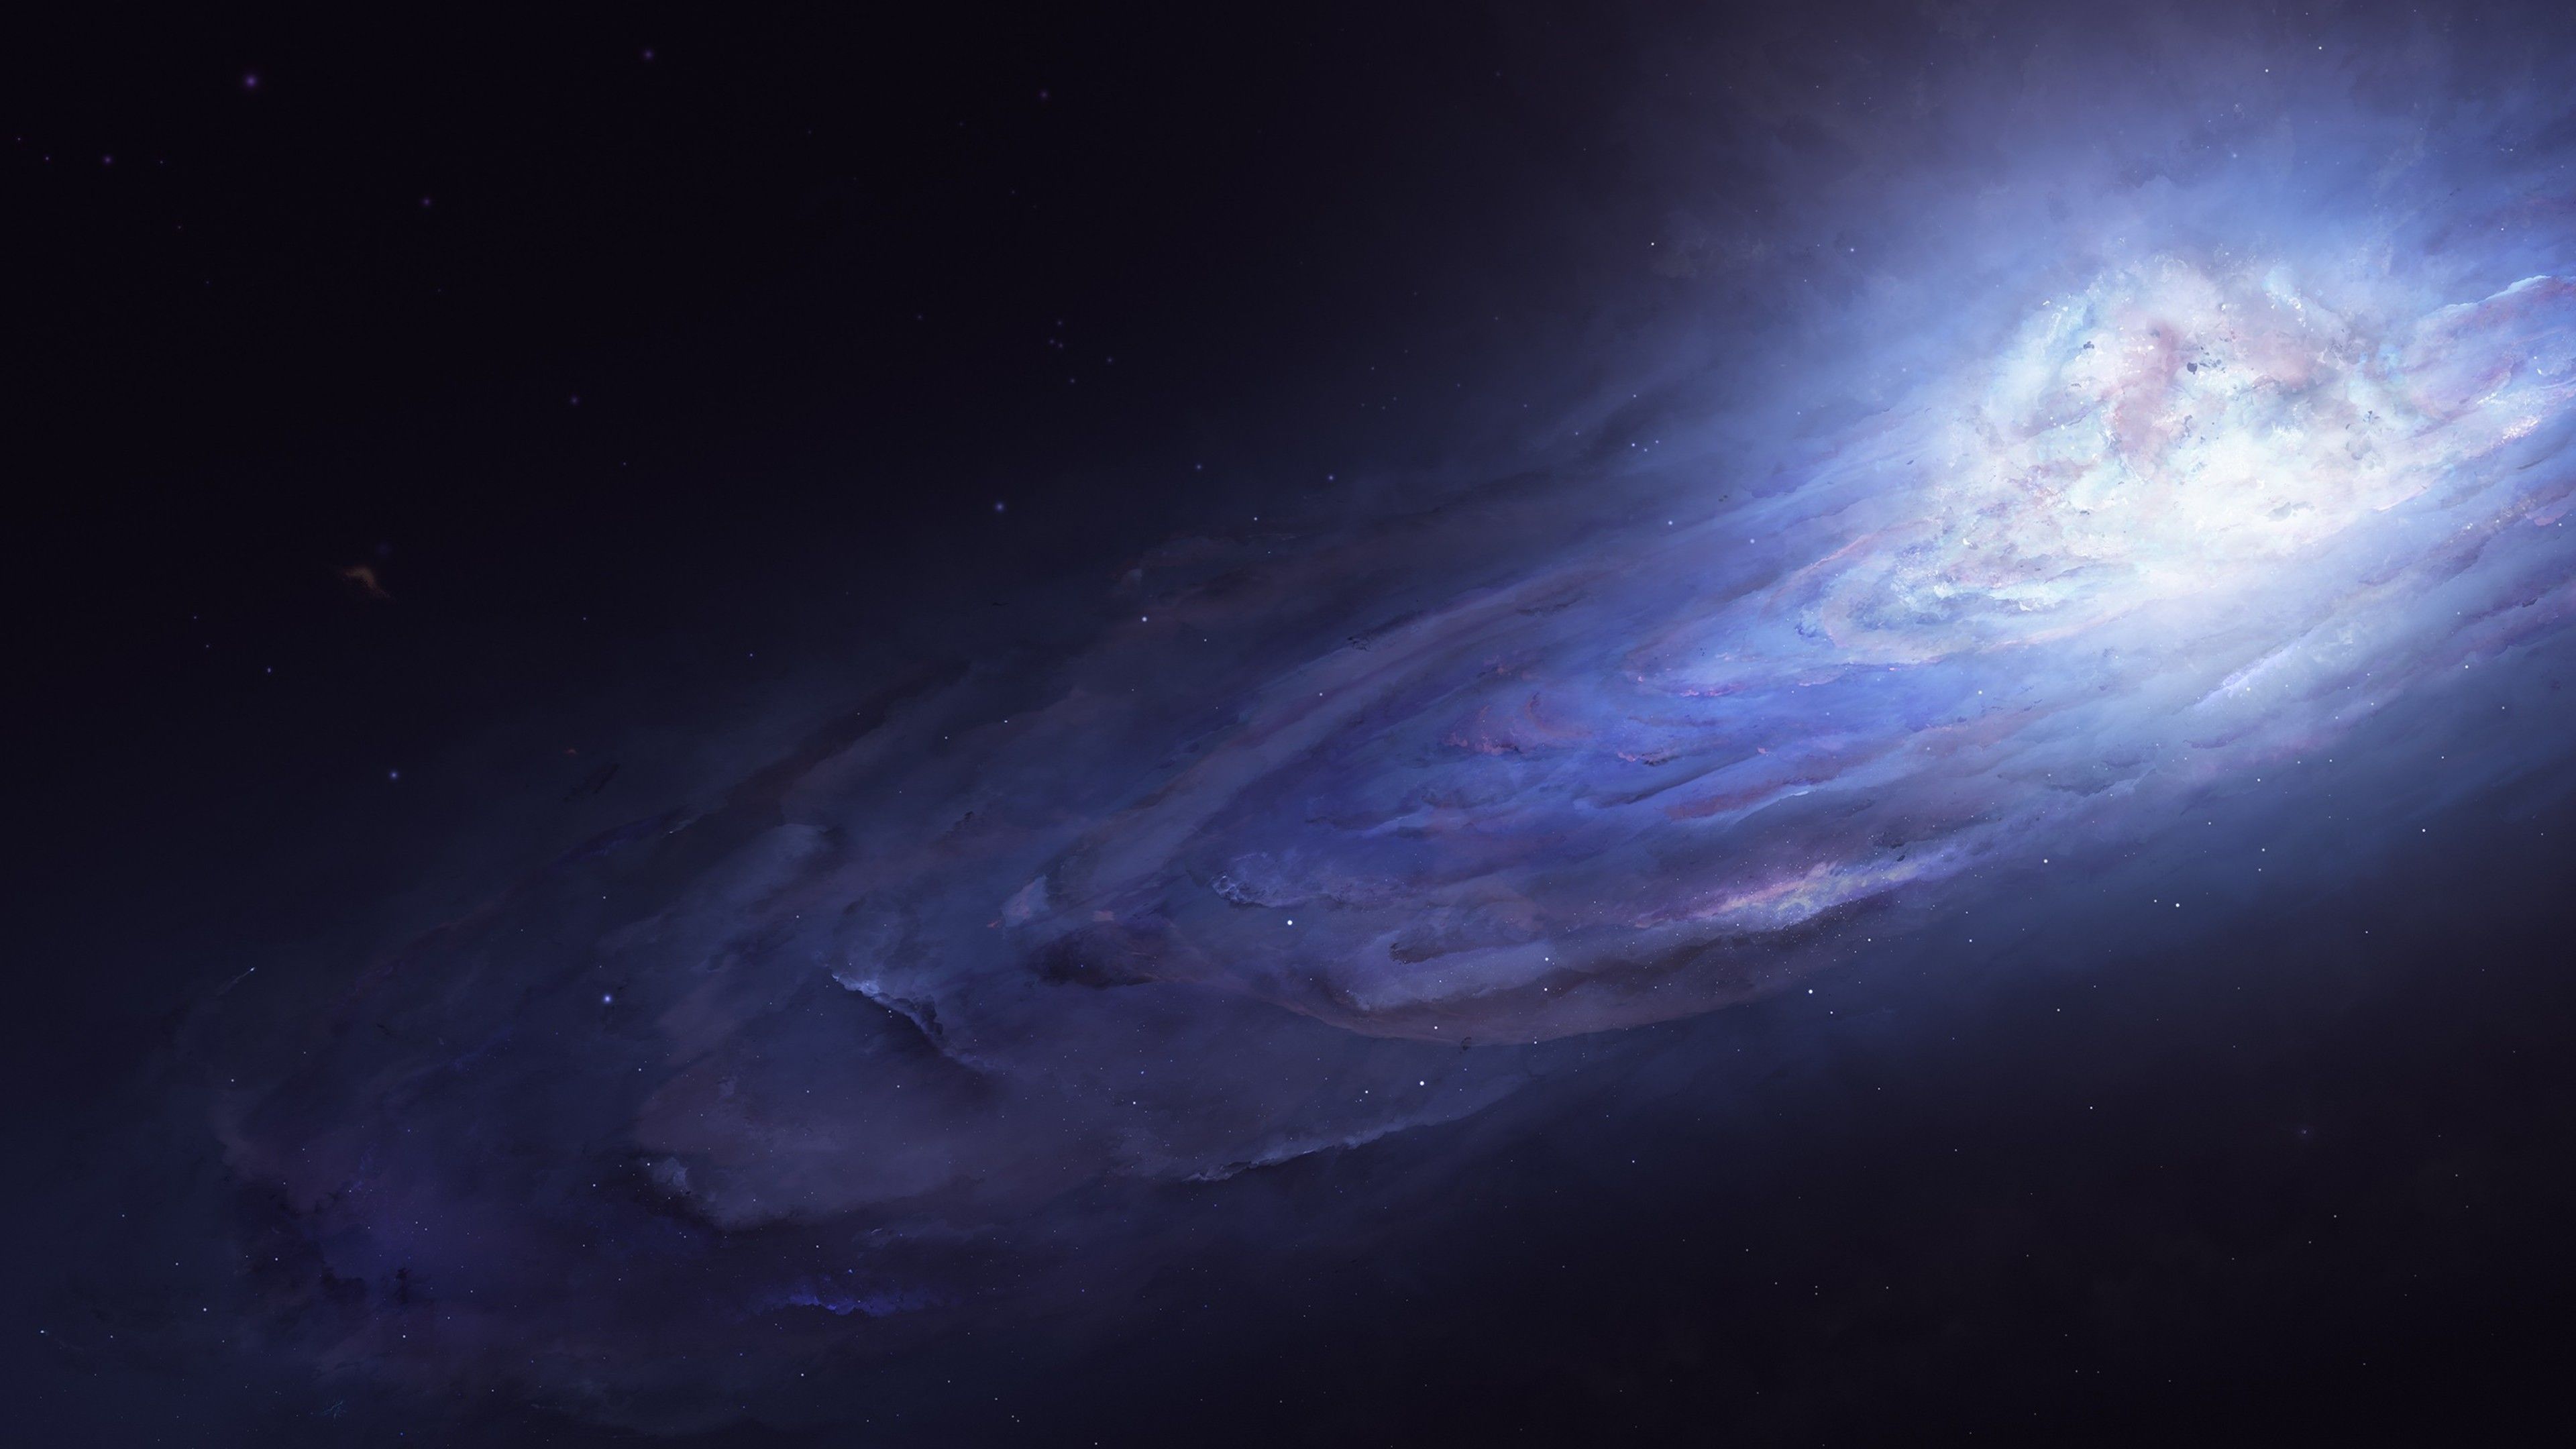 The Andromeda Galaxy Wallpapers